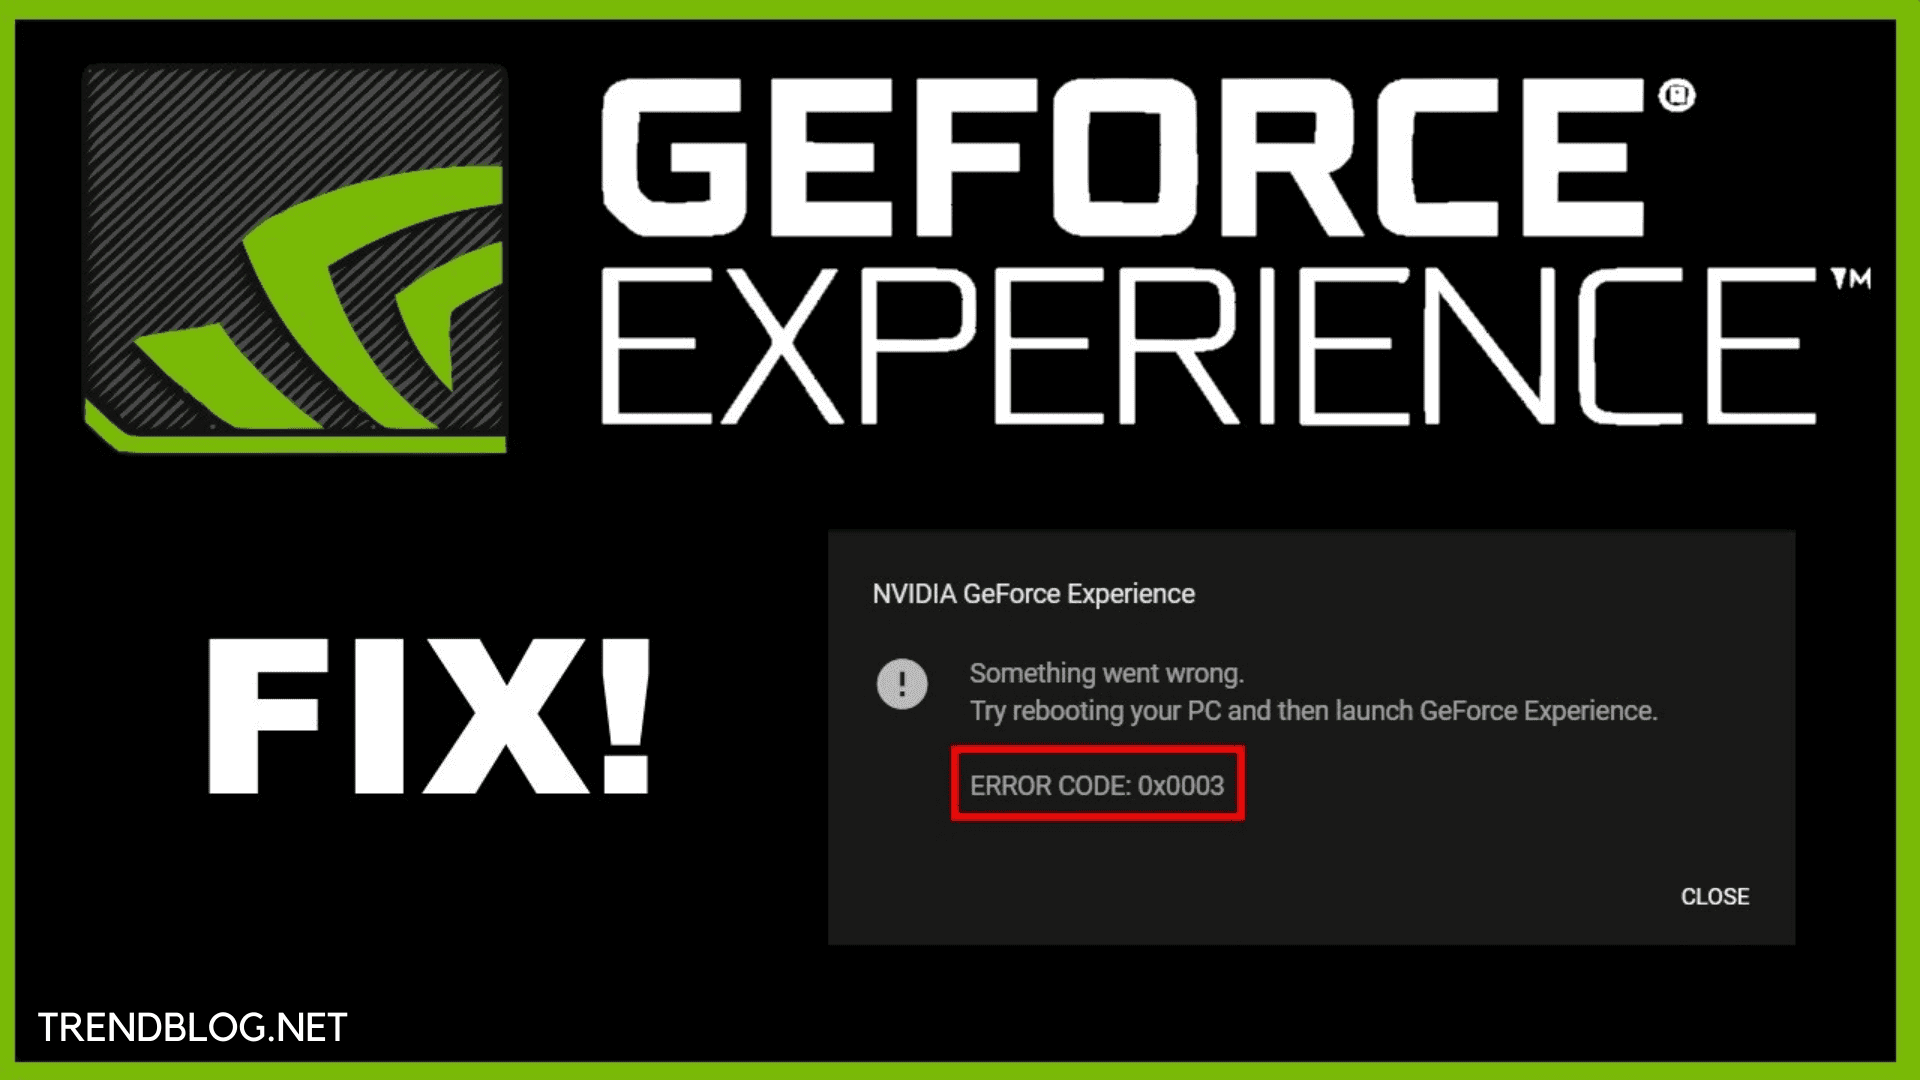 Geforce experience error code. Нвидиа. NVIDIA GEFORCE experience. Код GEFORCE experience. NVIDIA GEFORCE experience ошибка 0x0003.